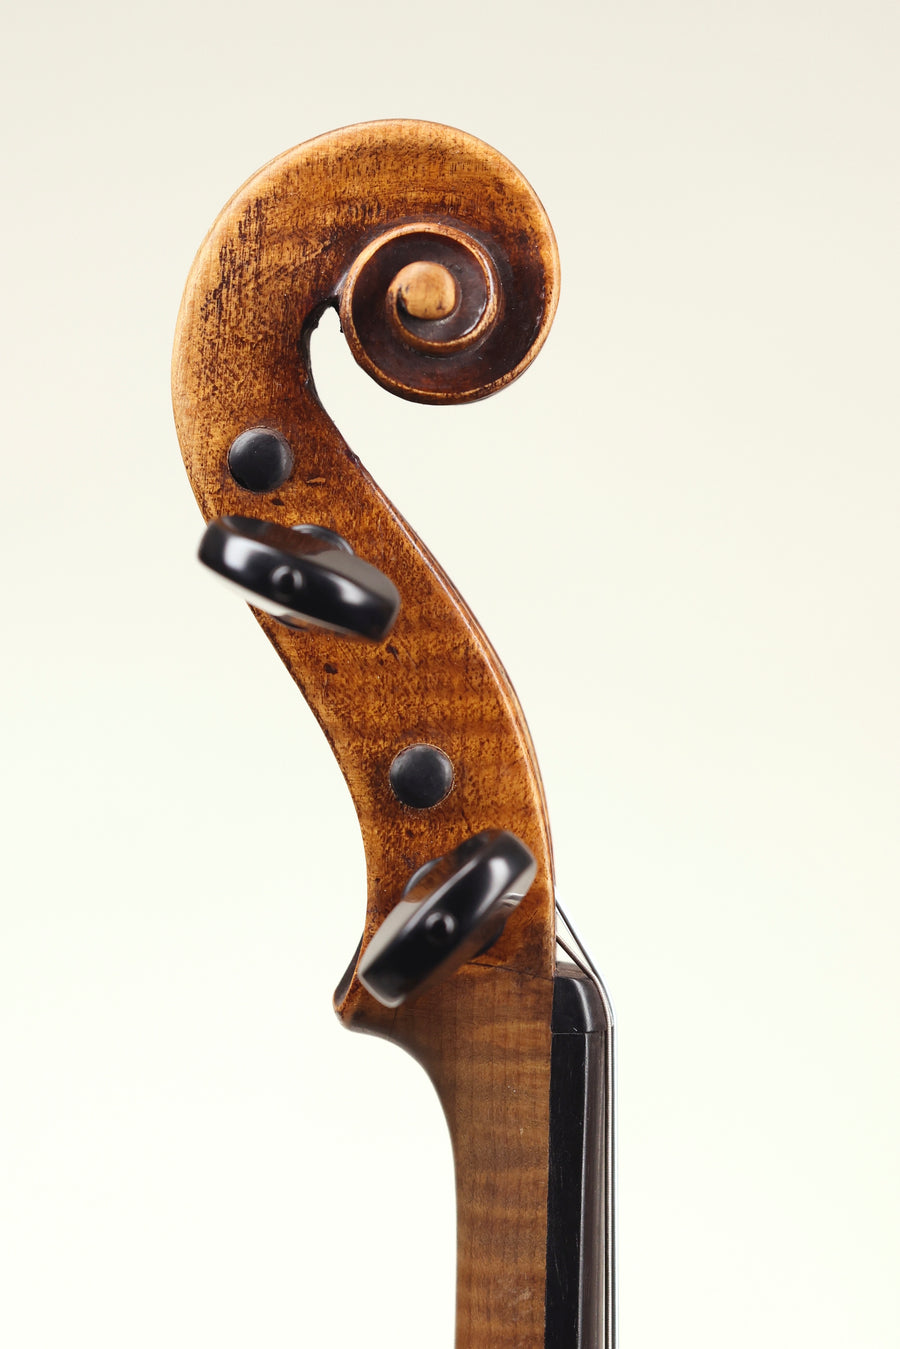 A Beautiful German Violin, Last Quarter 19th Century.